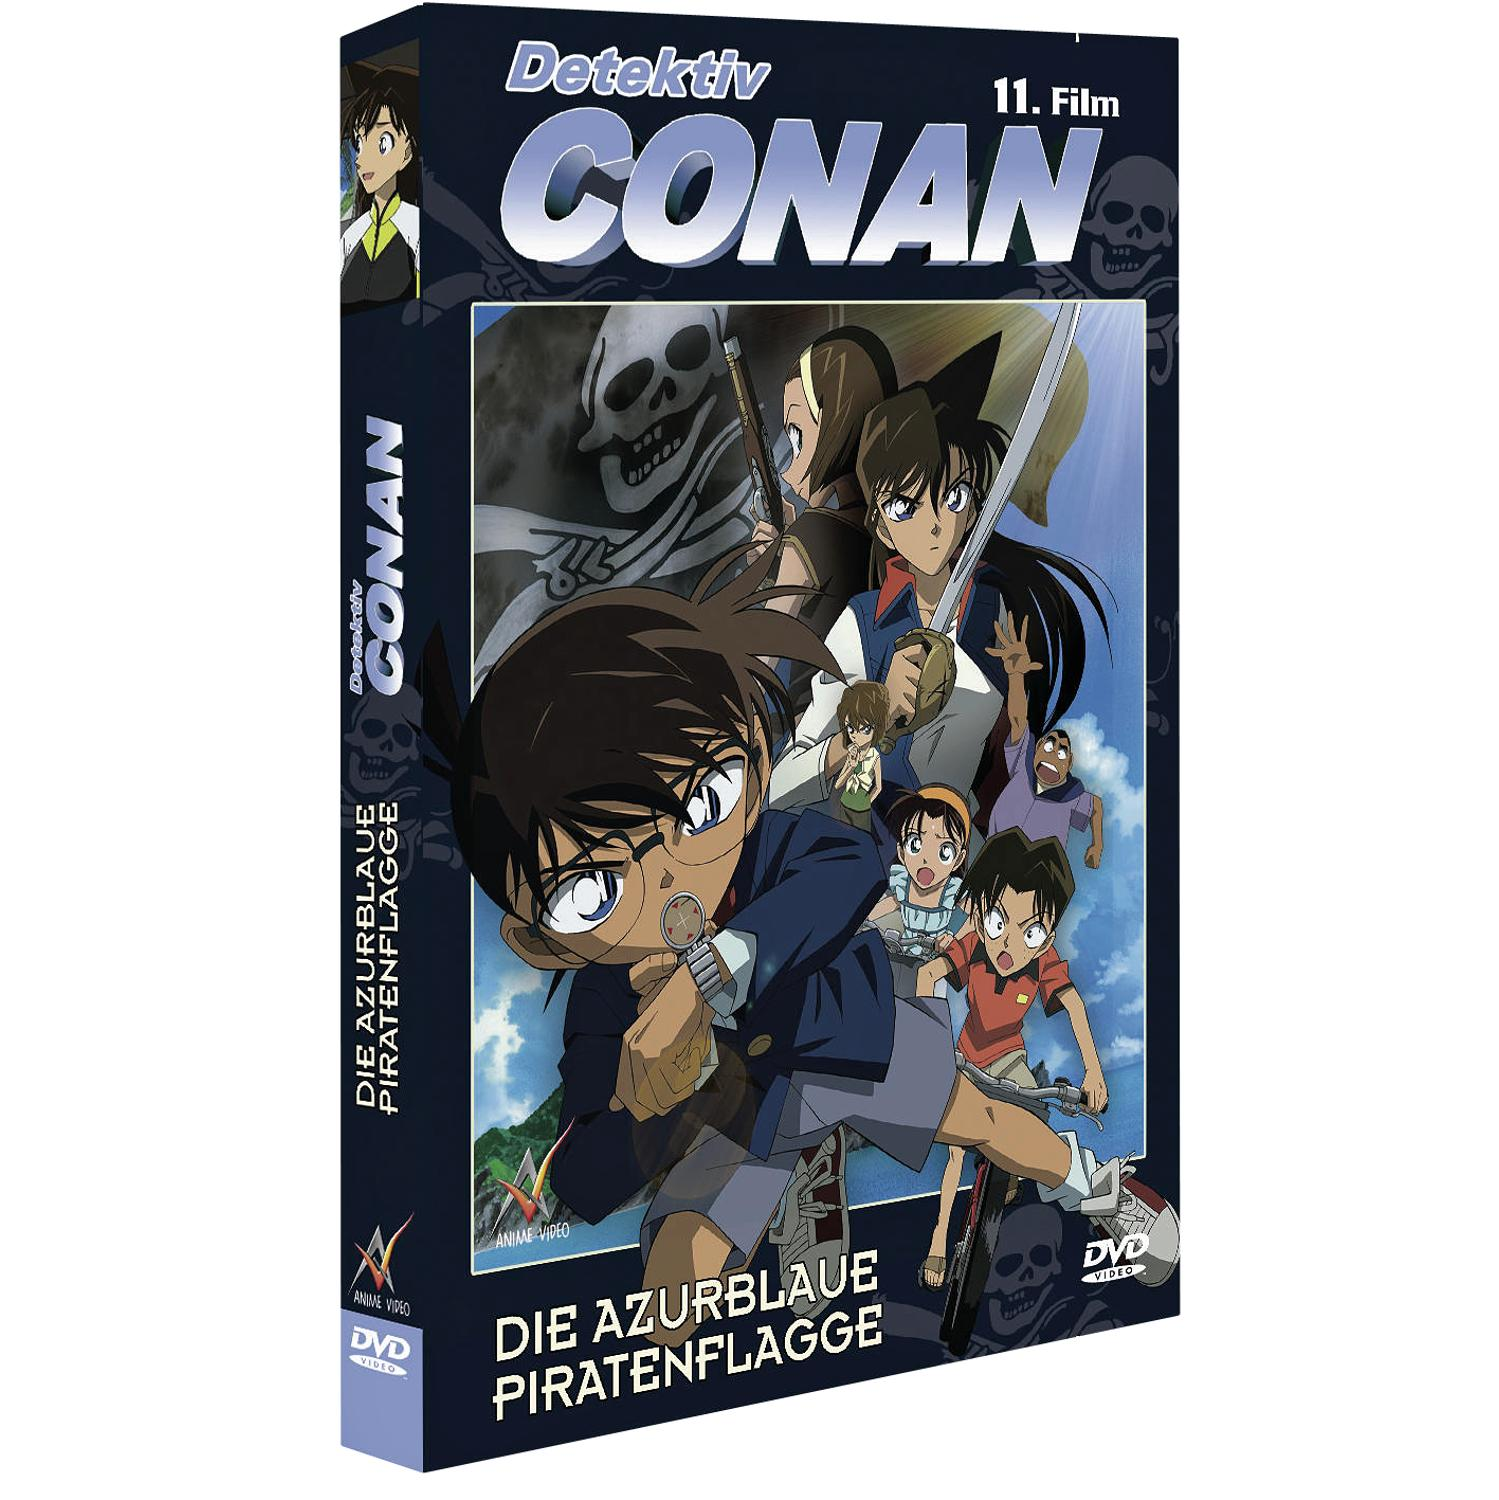 11. DVD Die azurblaue Detektiv Piratenflagge Film: - Conan